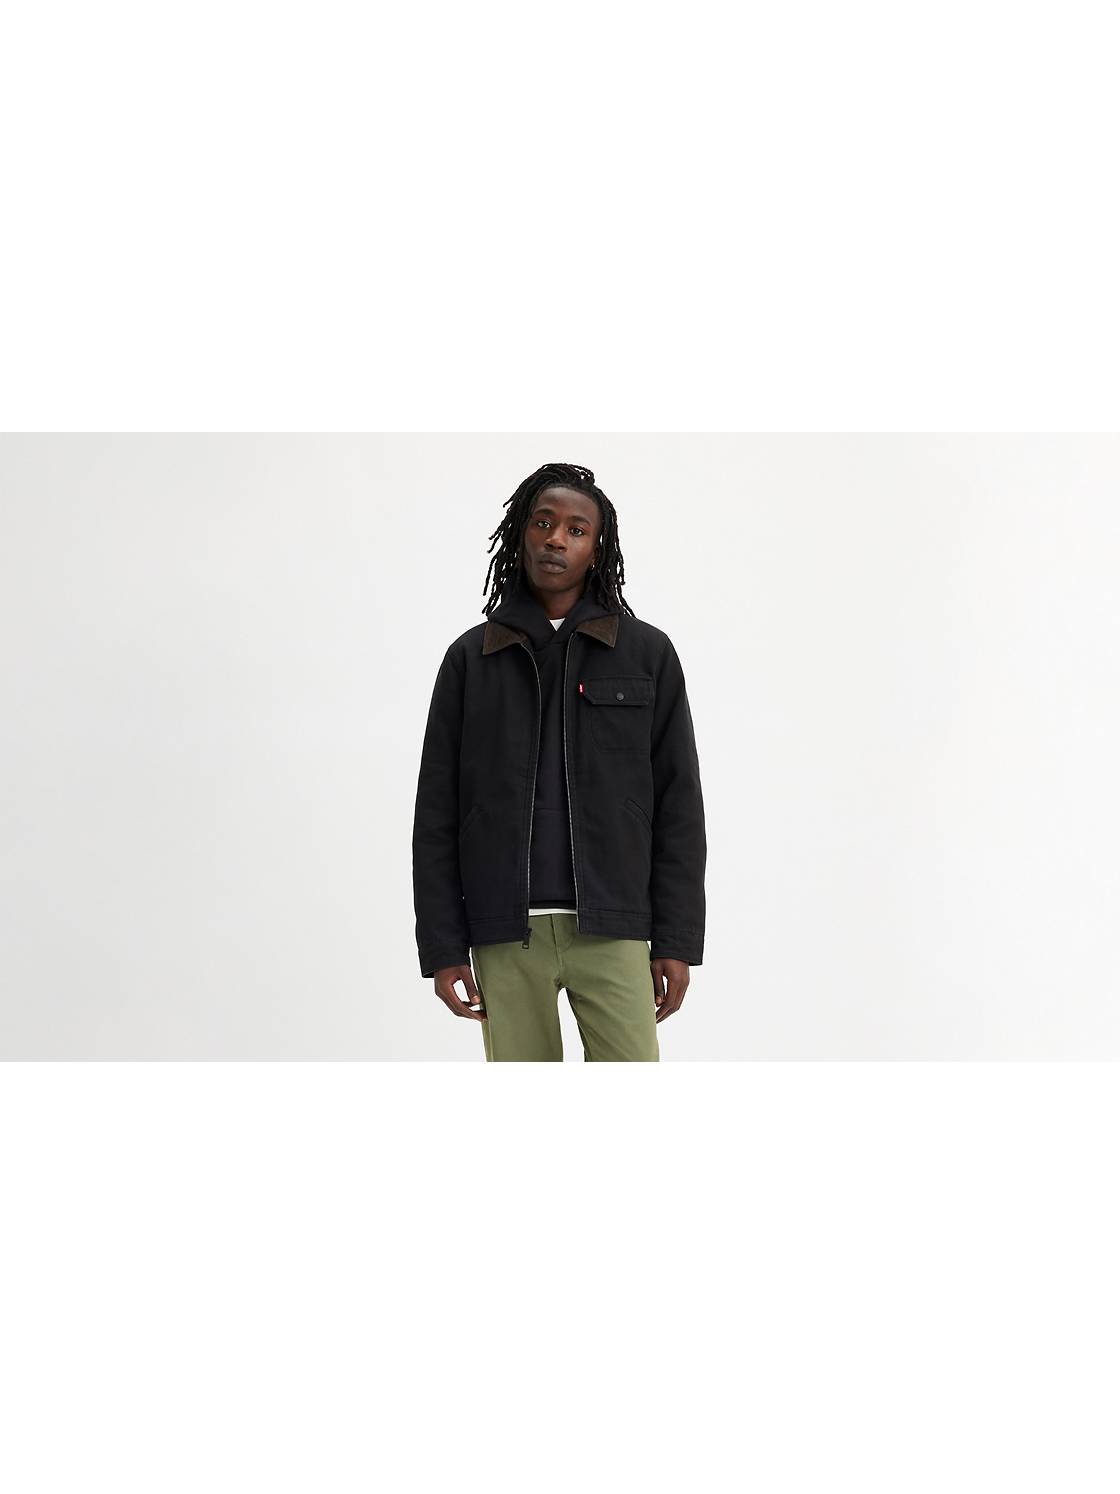 Medium-Weight Tall Puffer Jacket for Men in Black S / Tall / Black